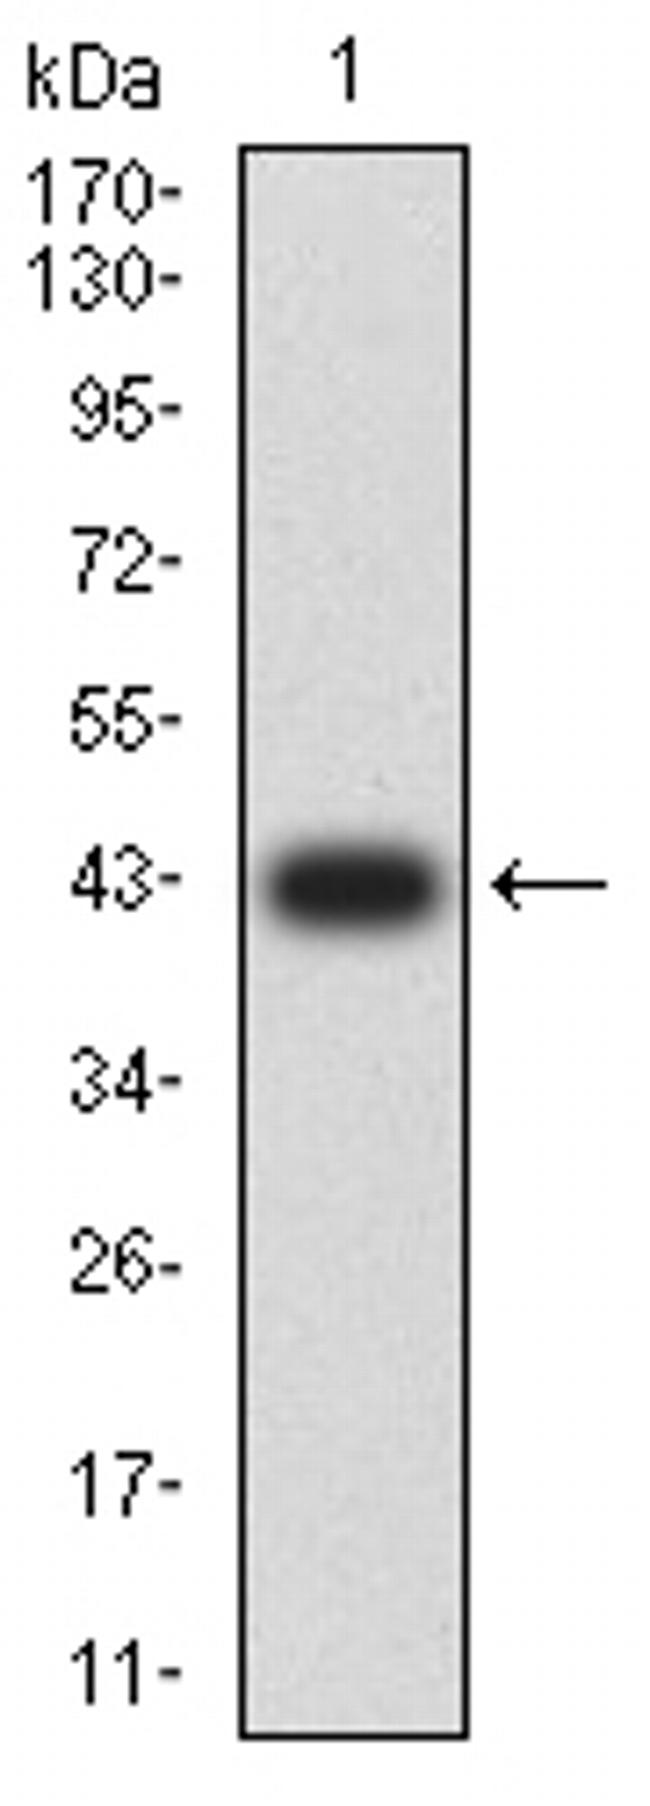 FSHR Antibody in Western Blot (WB)